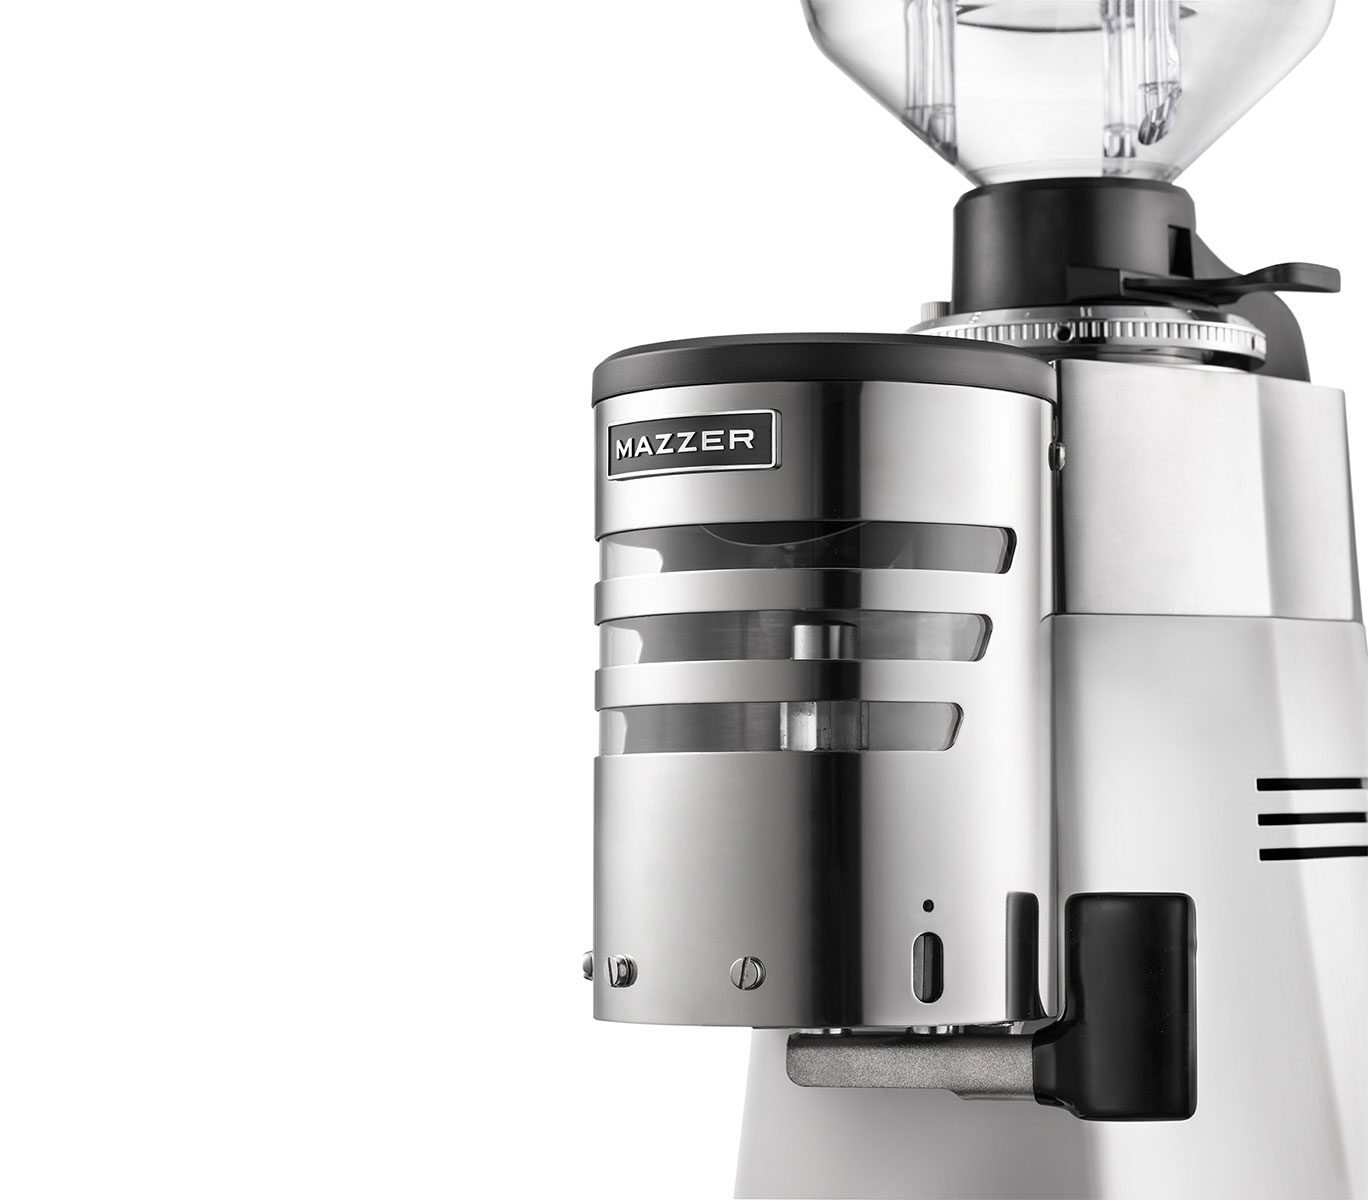 Mazzer Robur S Manual Doser Commercial Espresso Grinder - Silver